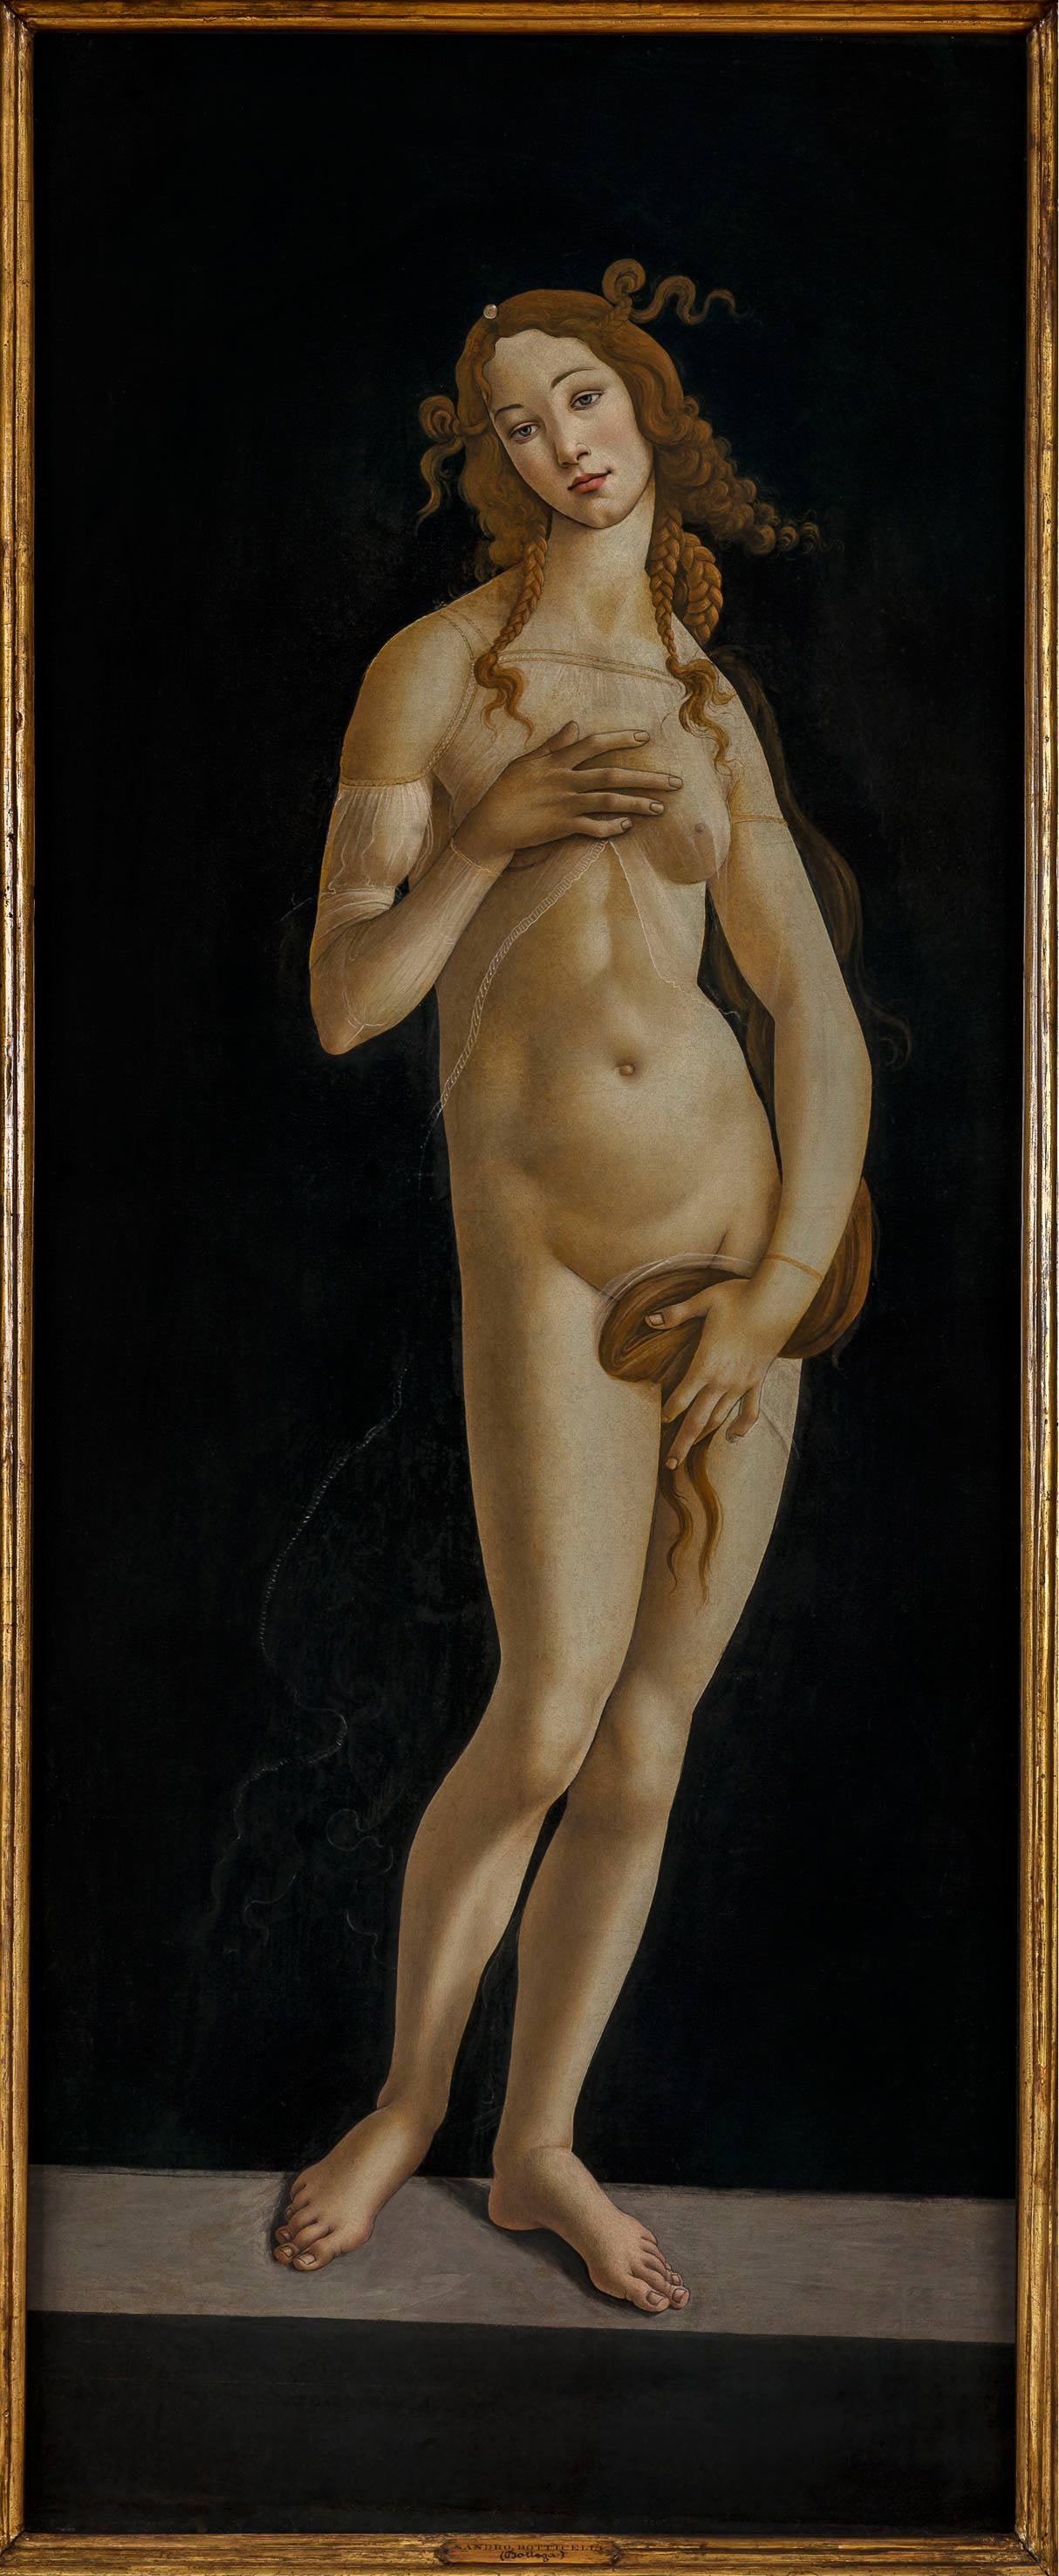 Sandro Botticelli or workshop, Venus (c. 1495-1497; oil on canvas, 174 x 77 cm; Turin, Galleria Sabauda)